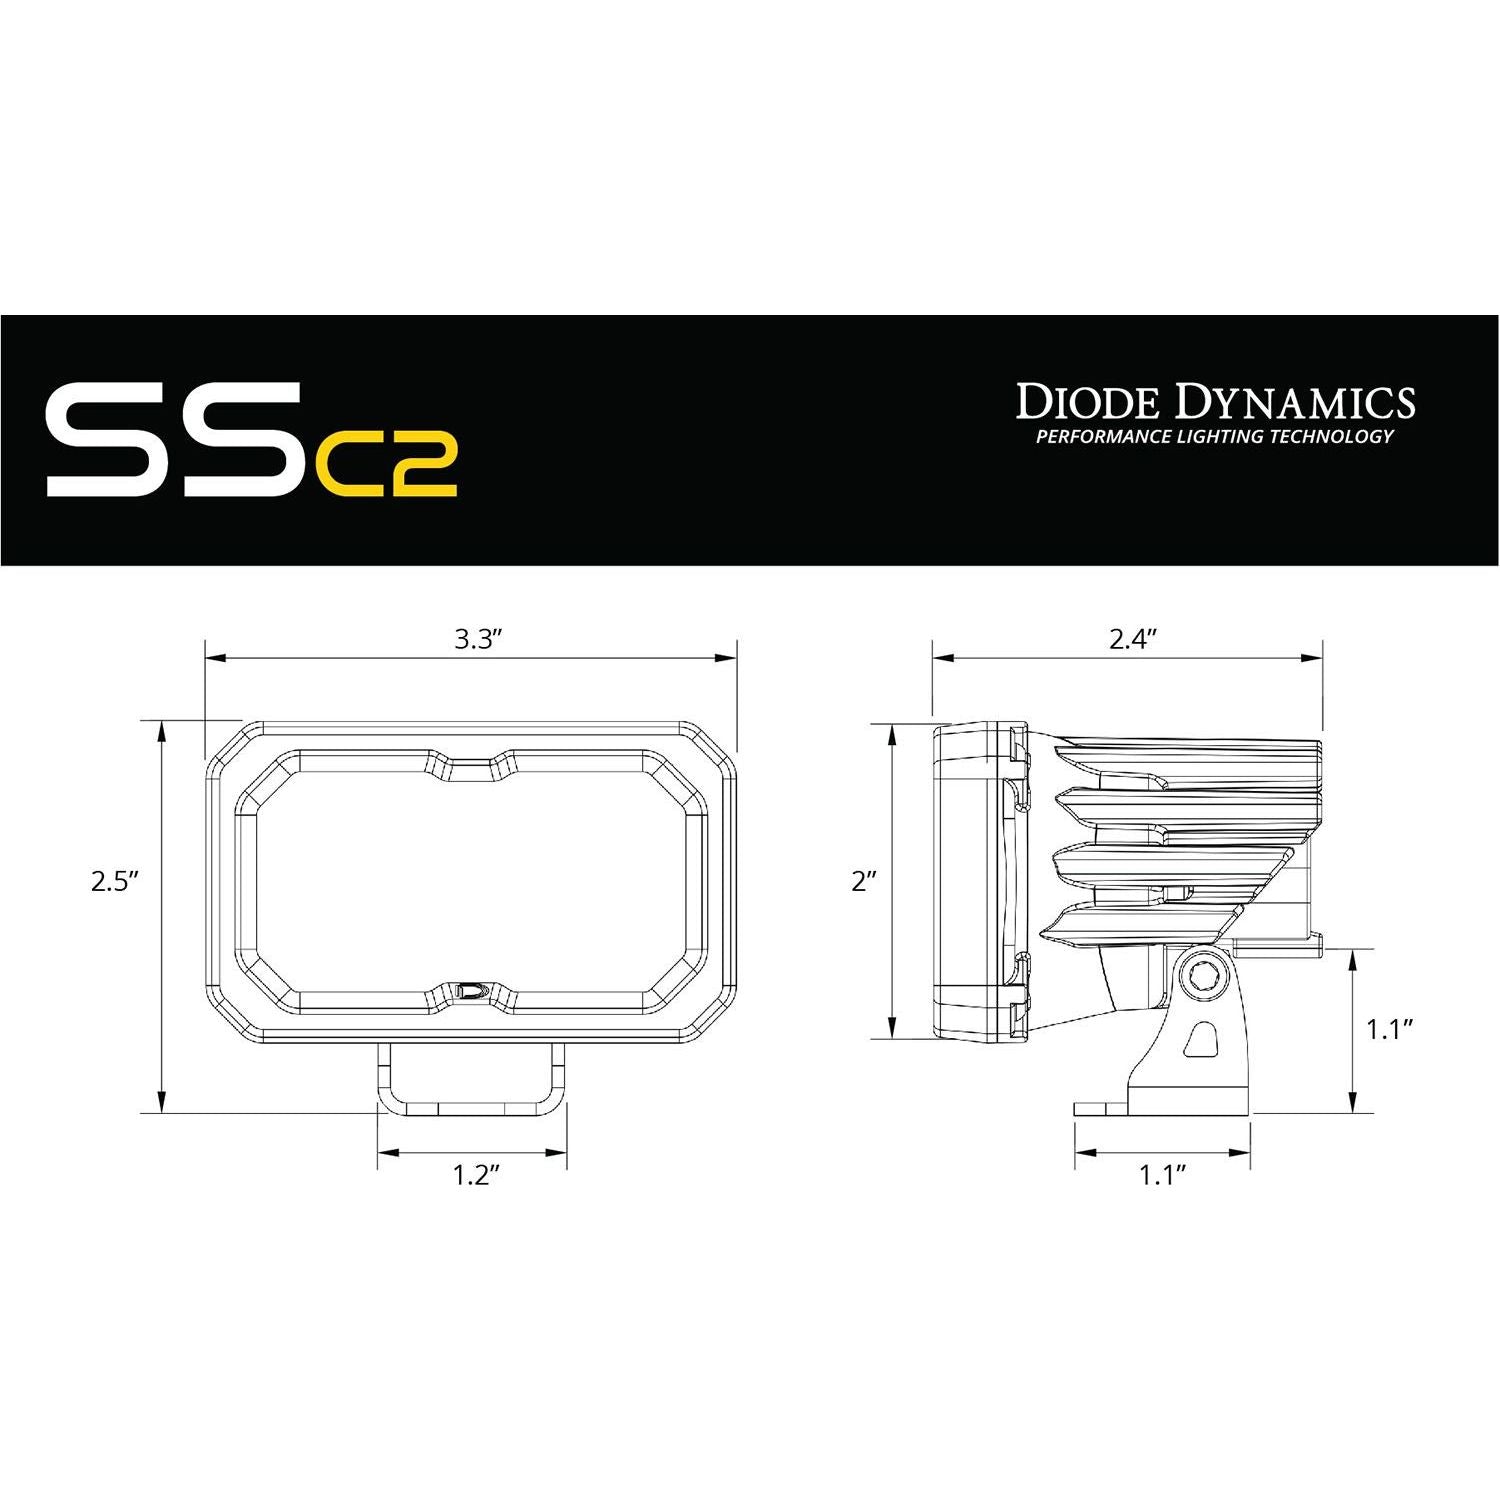 SSC2 Universal Roll Bar Chase Light Kit | Diode Dynamics